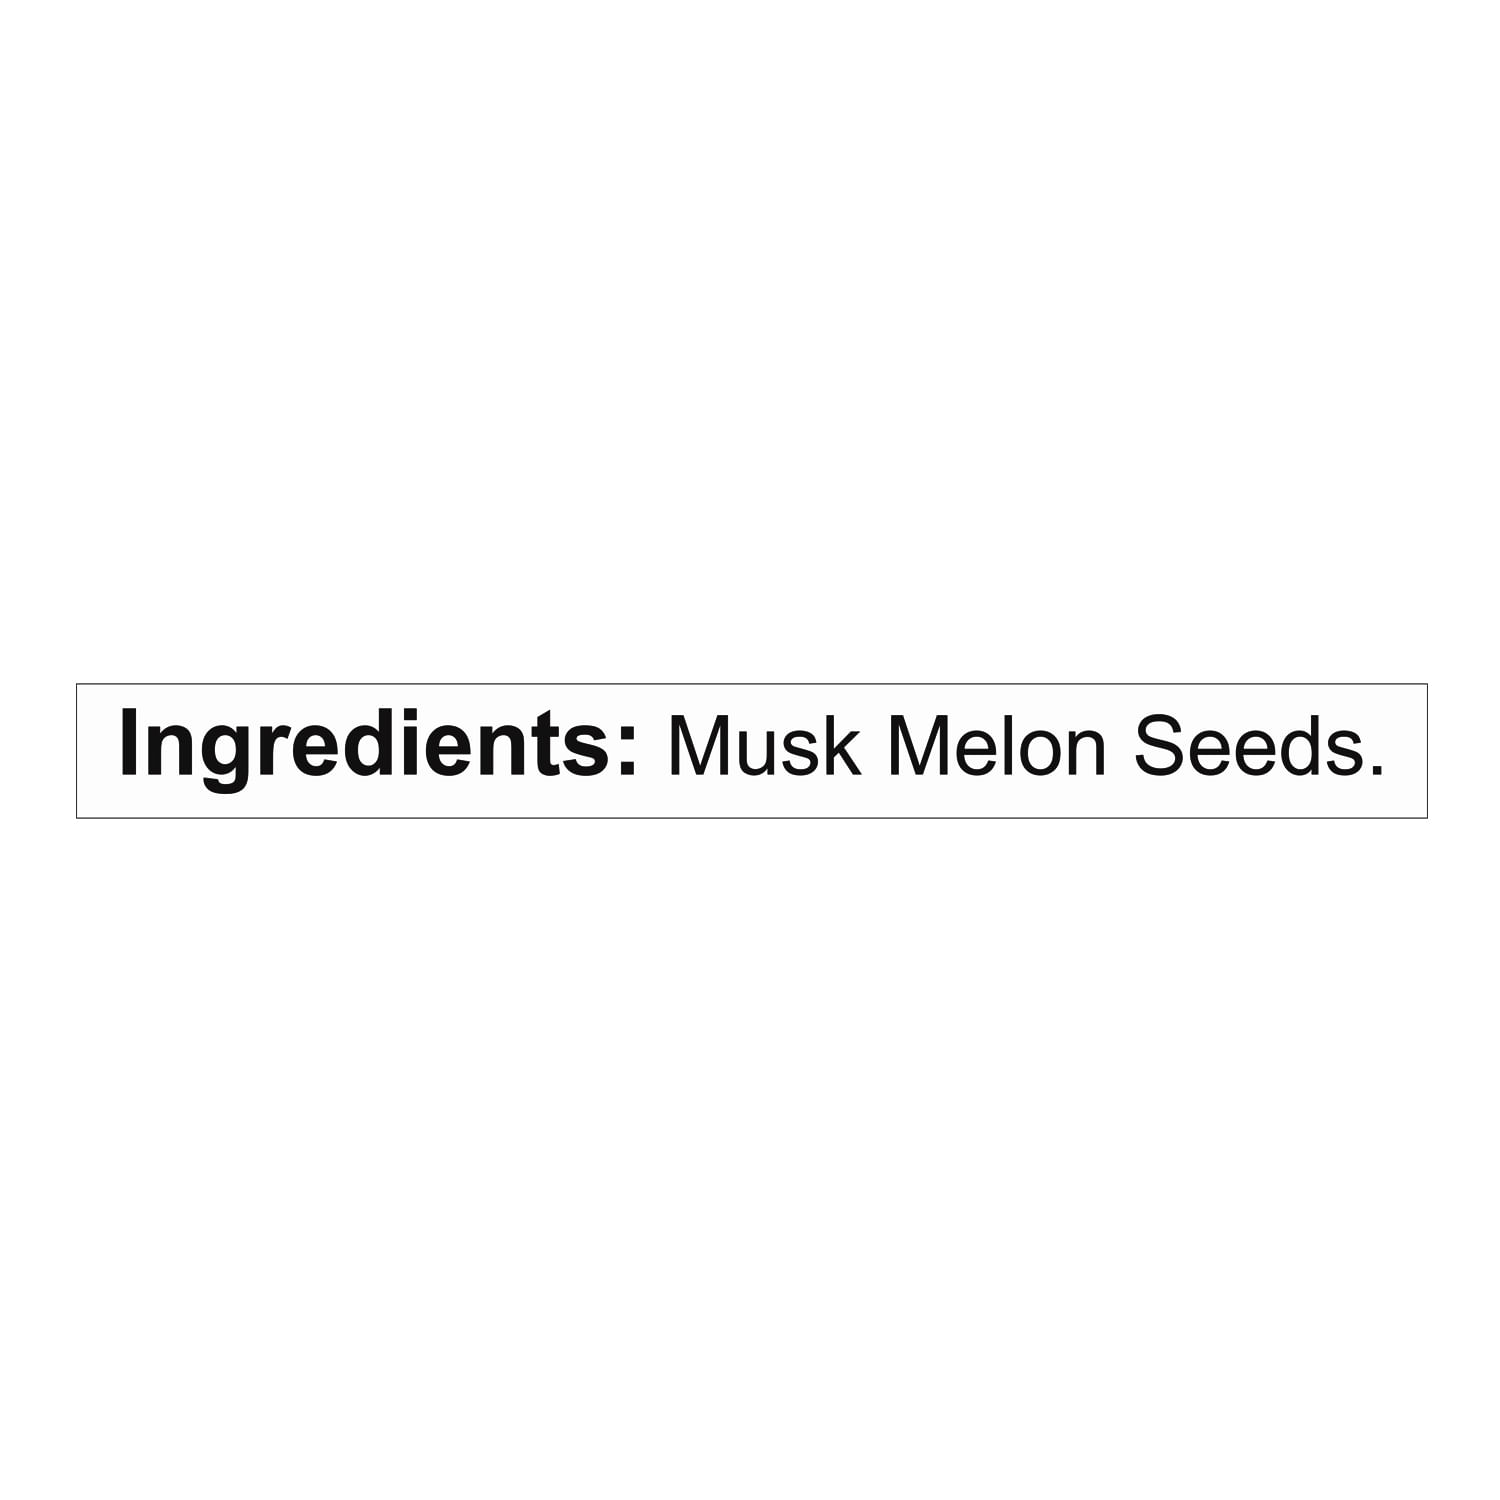 Nutraj Musk Melon Seeds 200g